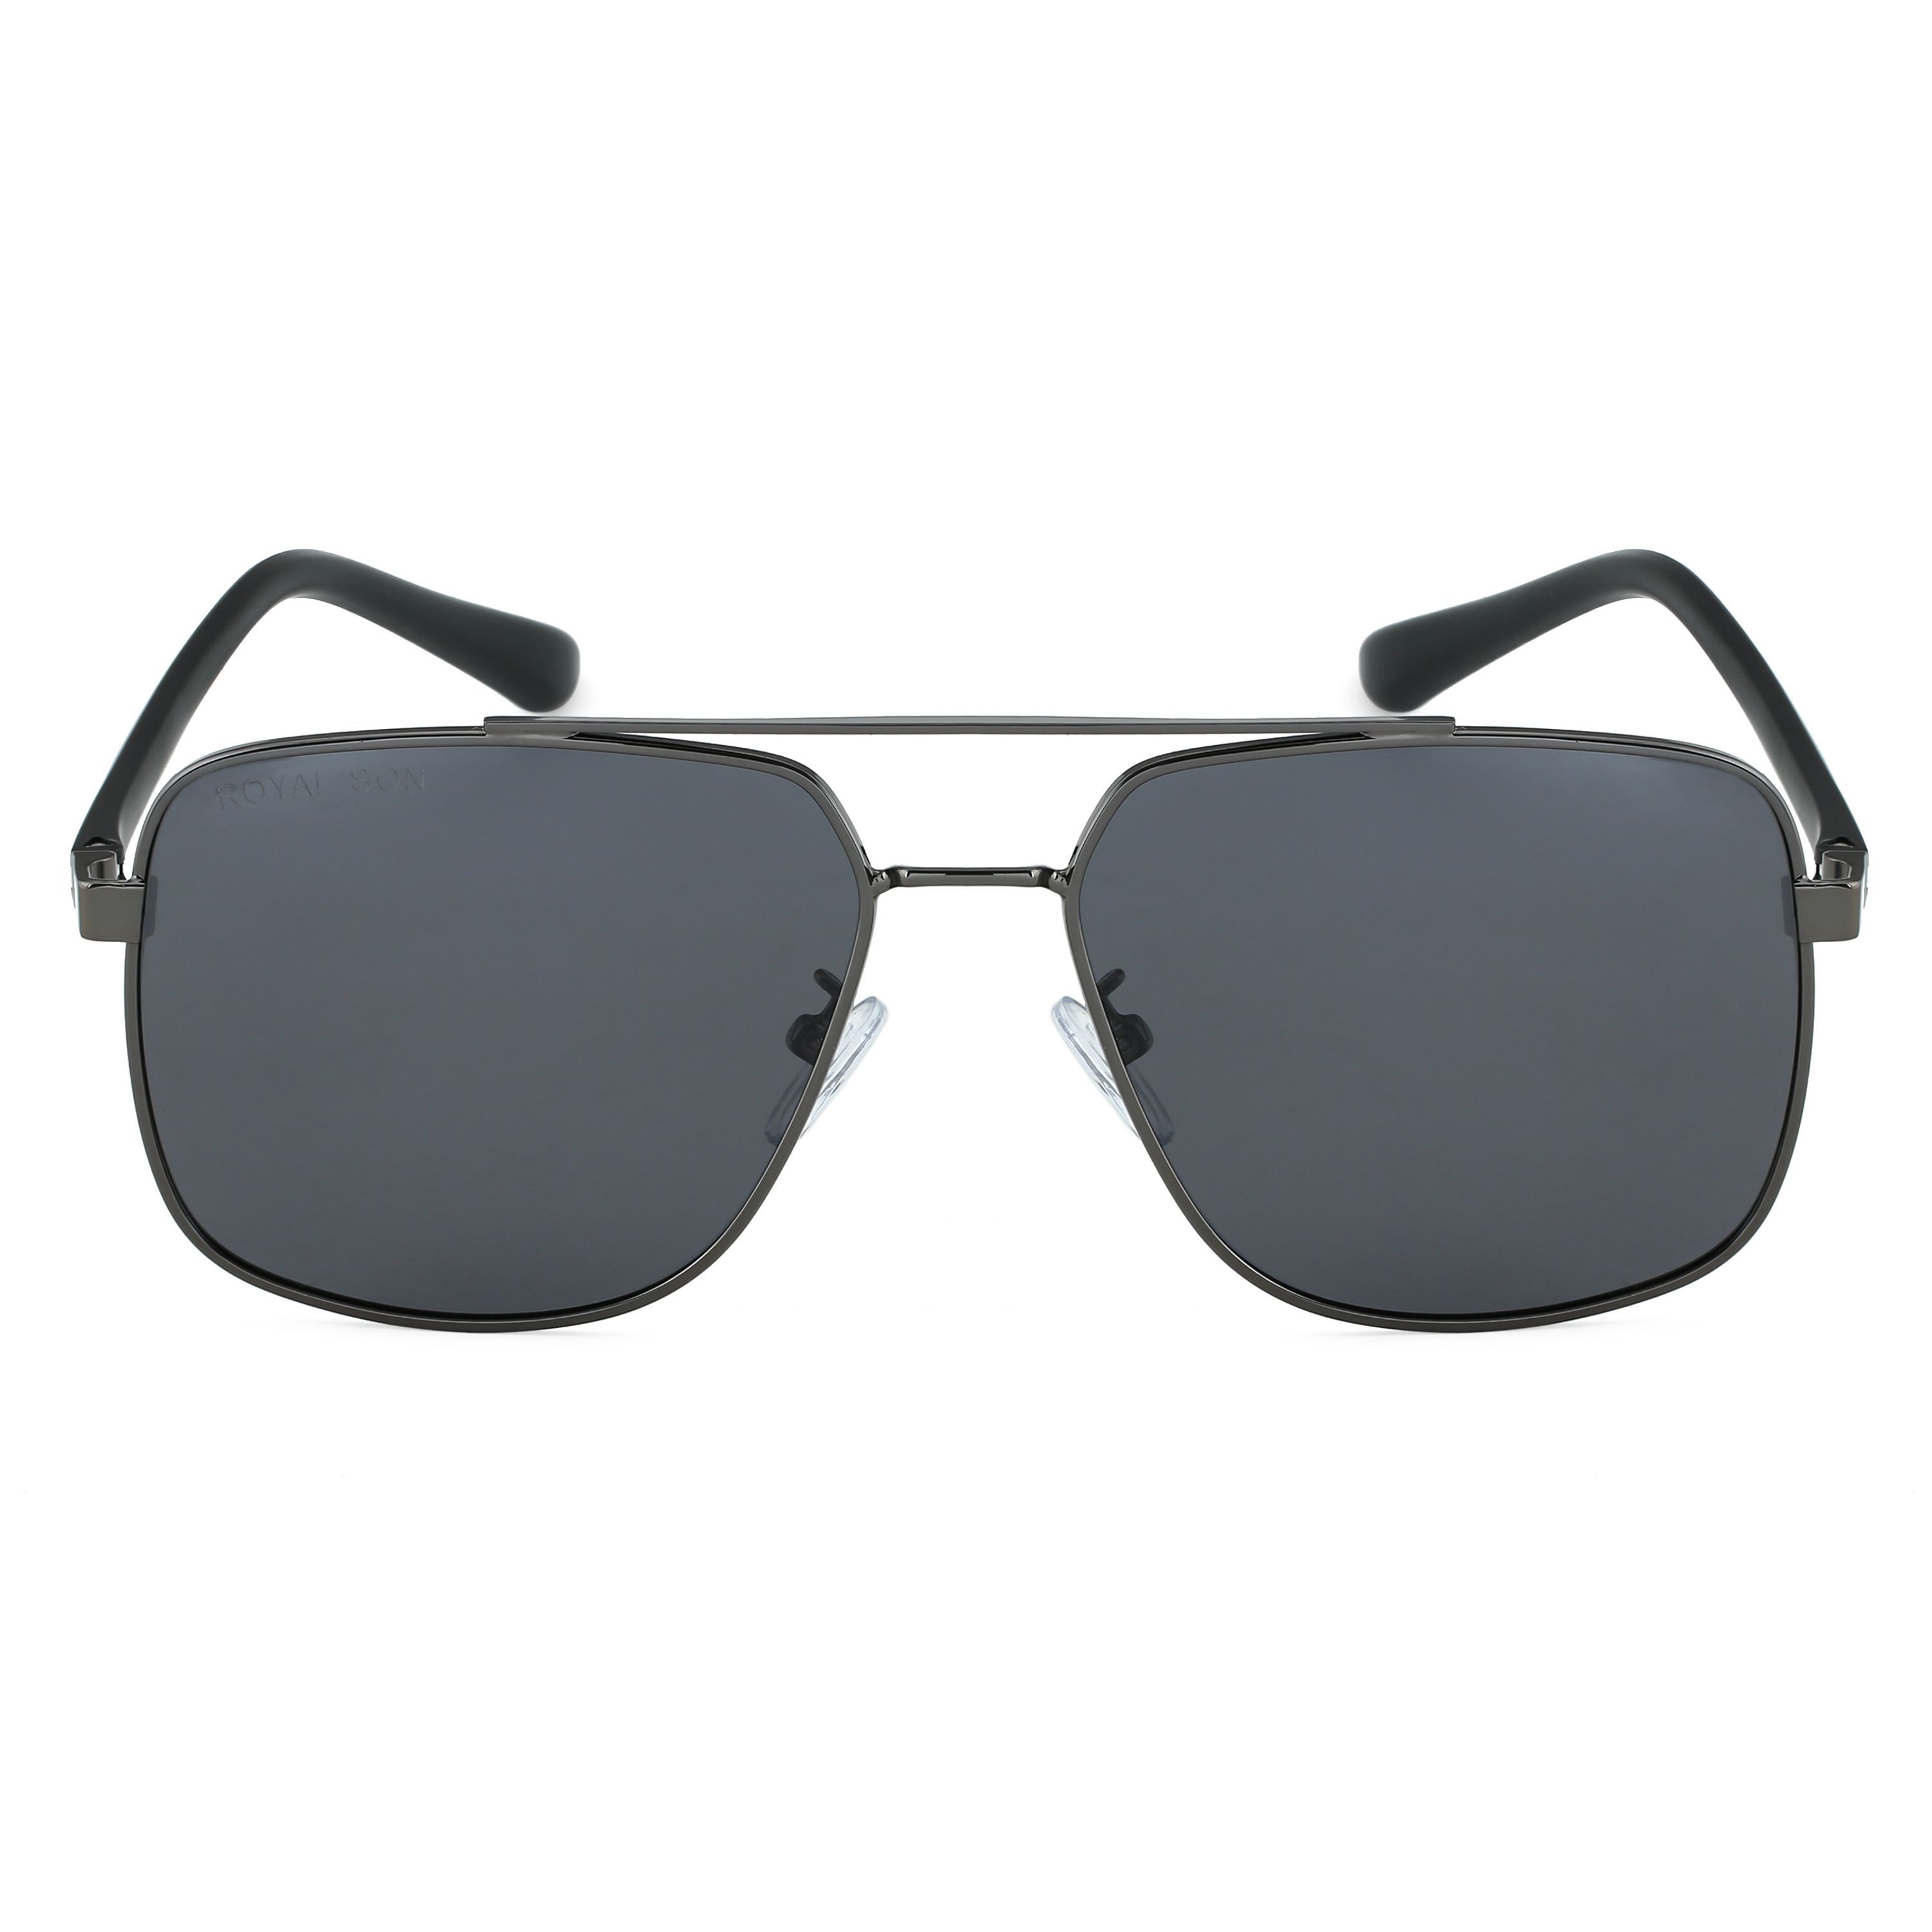 Only & Sons retro square sunglasses in black